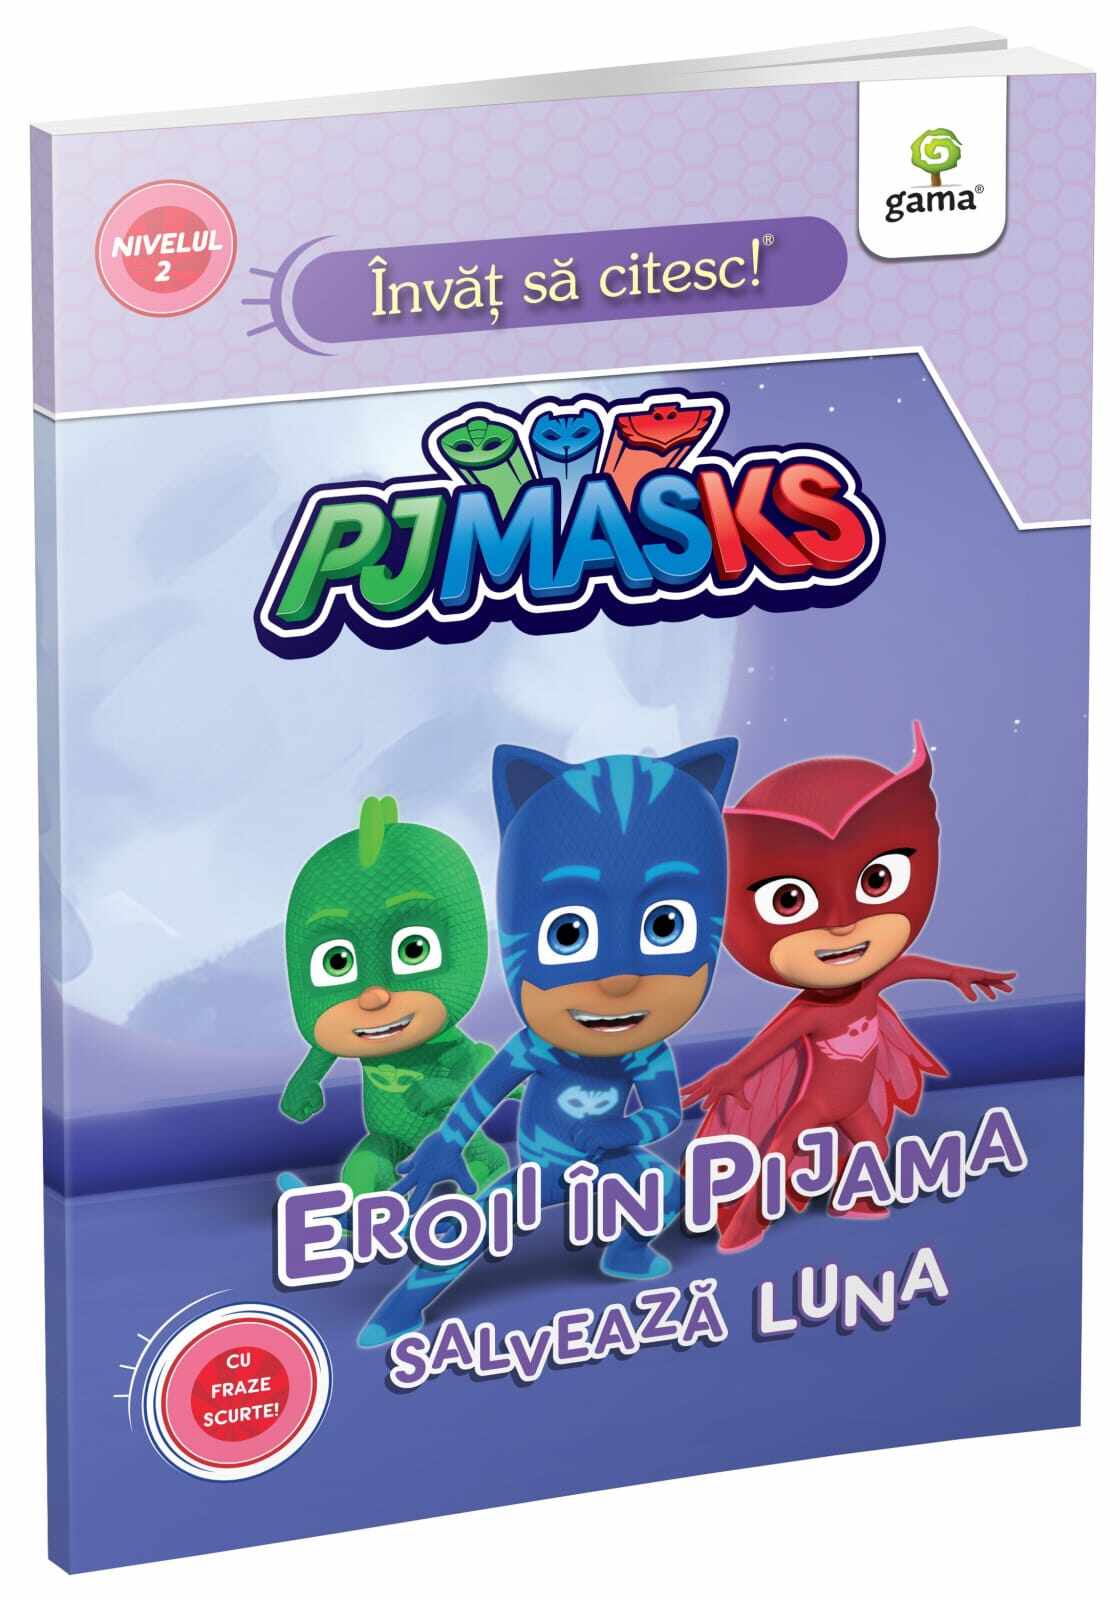 Eroii in pijama salveaza Luna, Editura Gama, 6-7 ani +